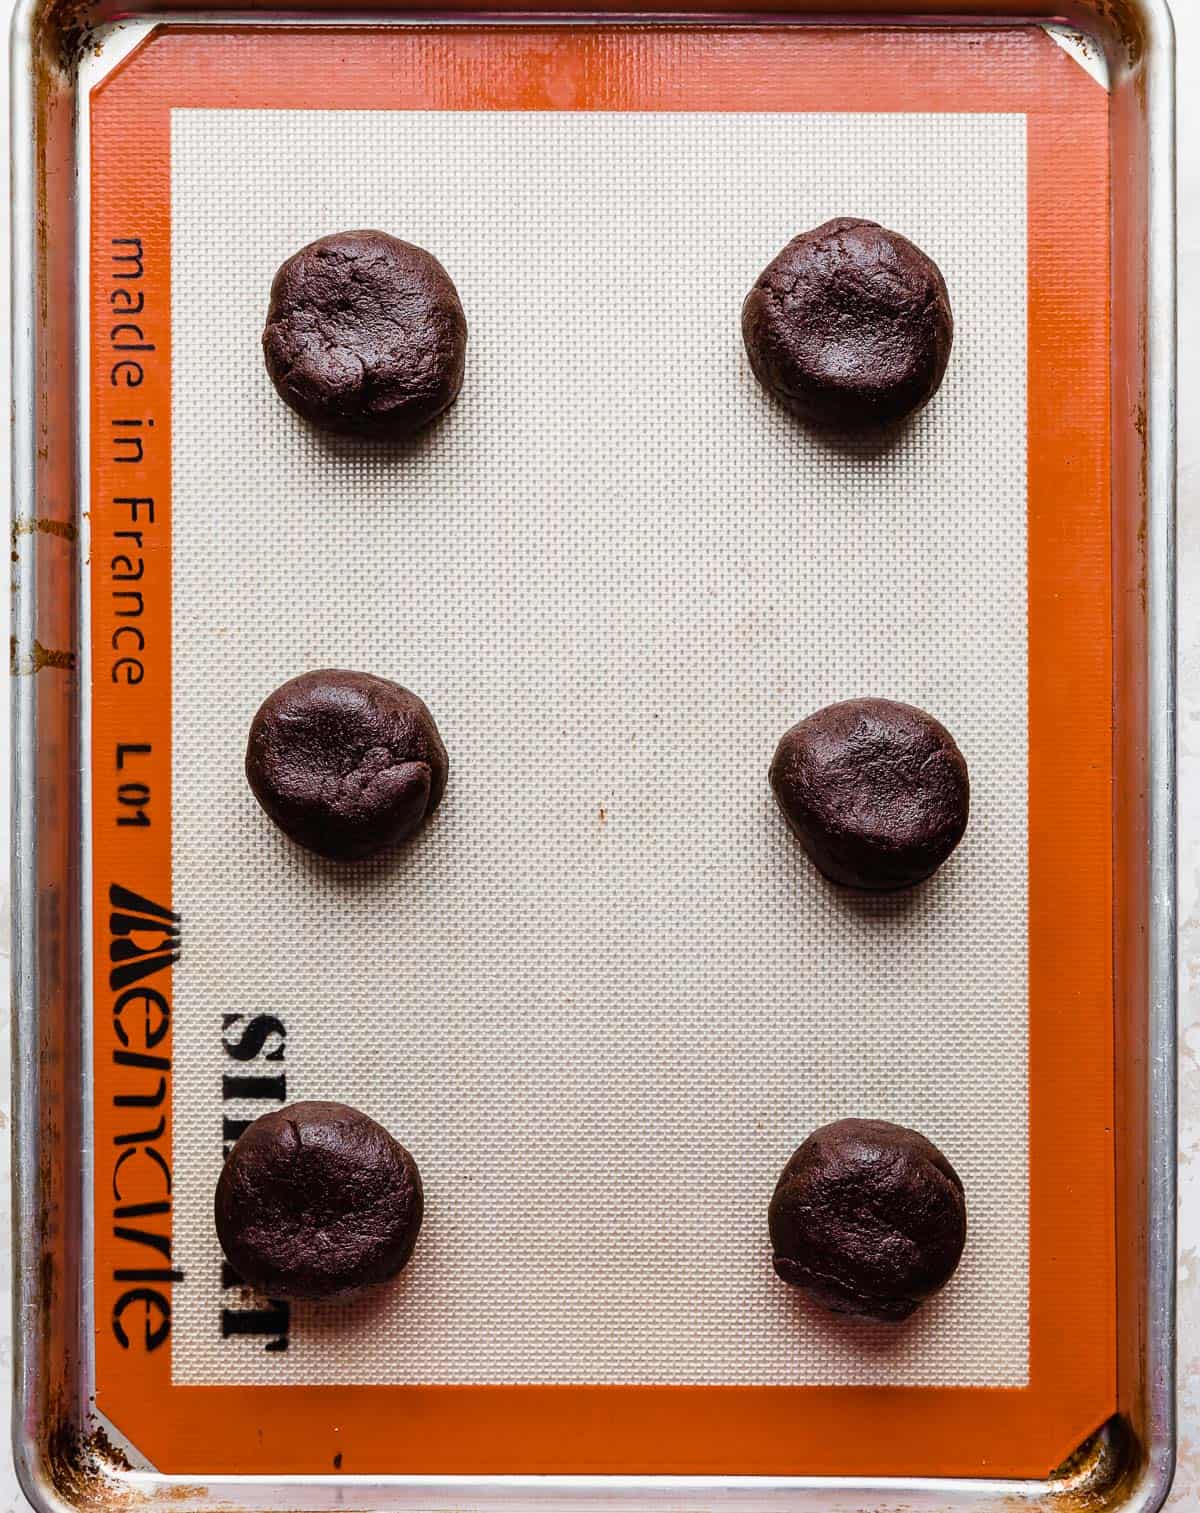 A baking sheet with six chocolate dough balls on it.